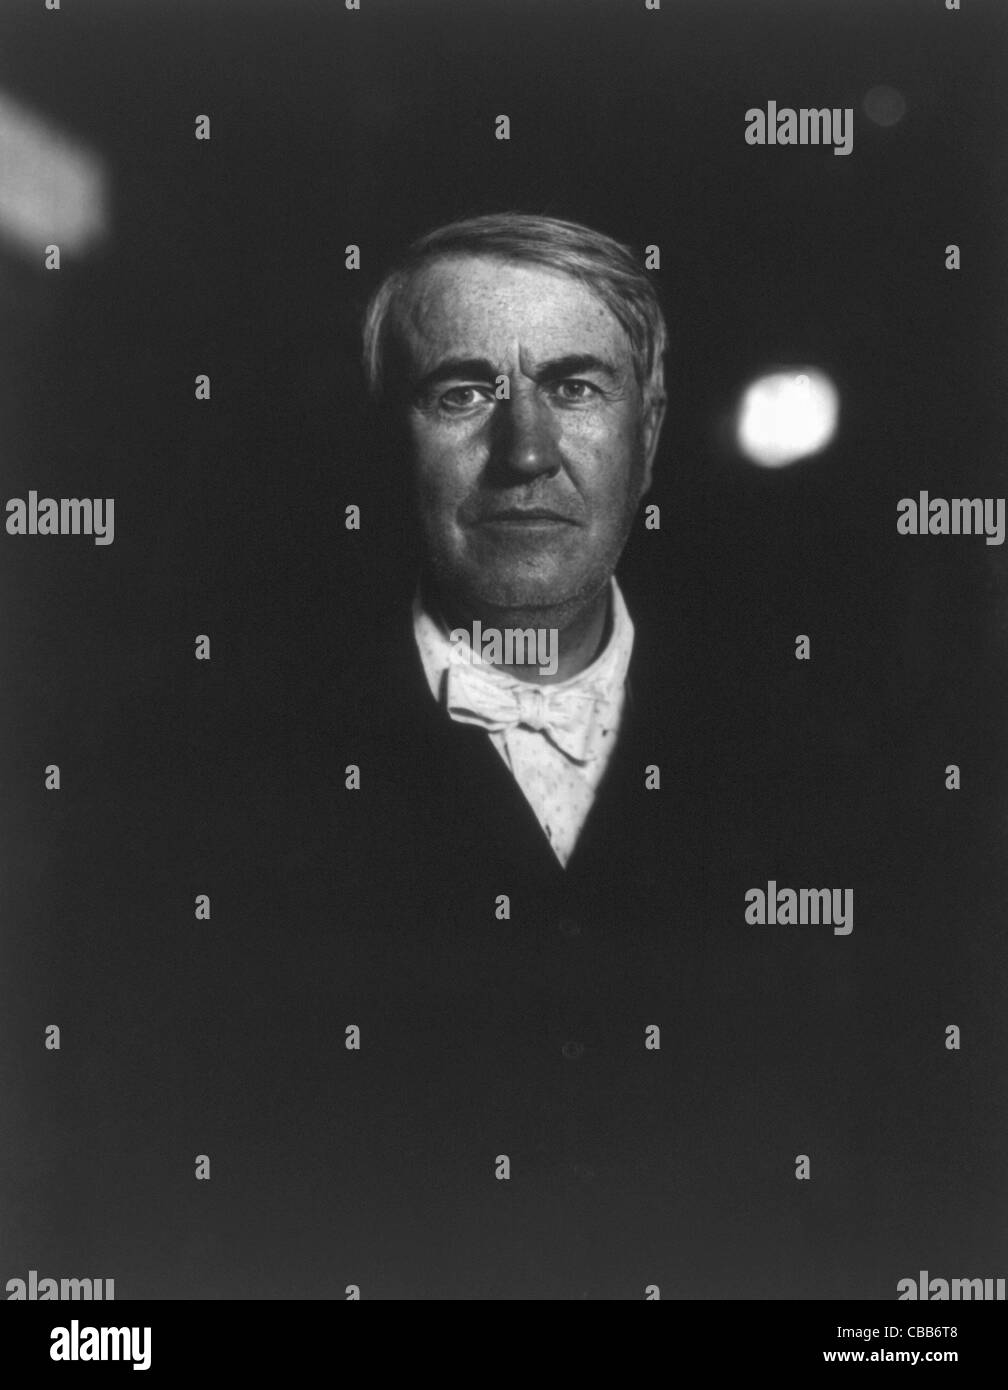 Vintage portrait photo of American inventor and businessman Thomas Alva Edison (1847 – 1931). Photo circa 1905. Stock Photo